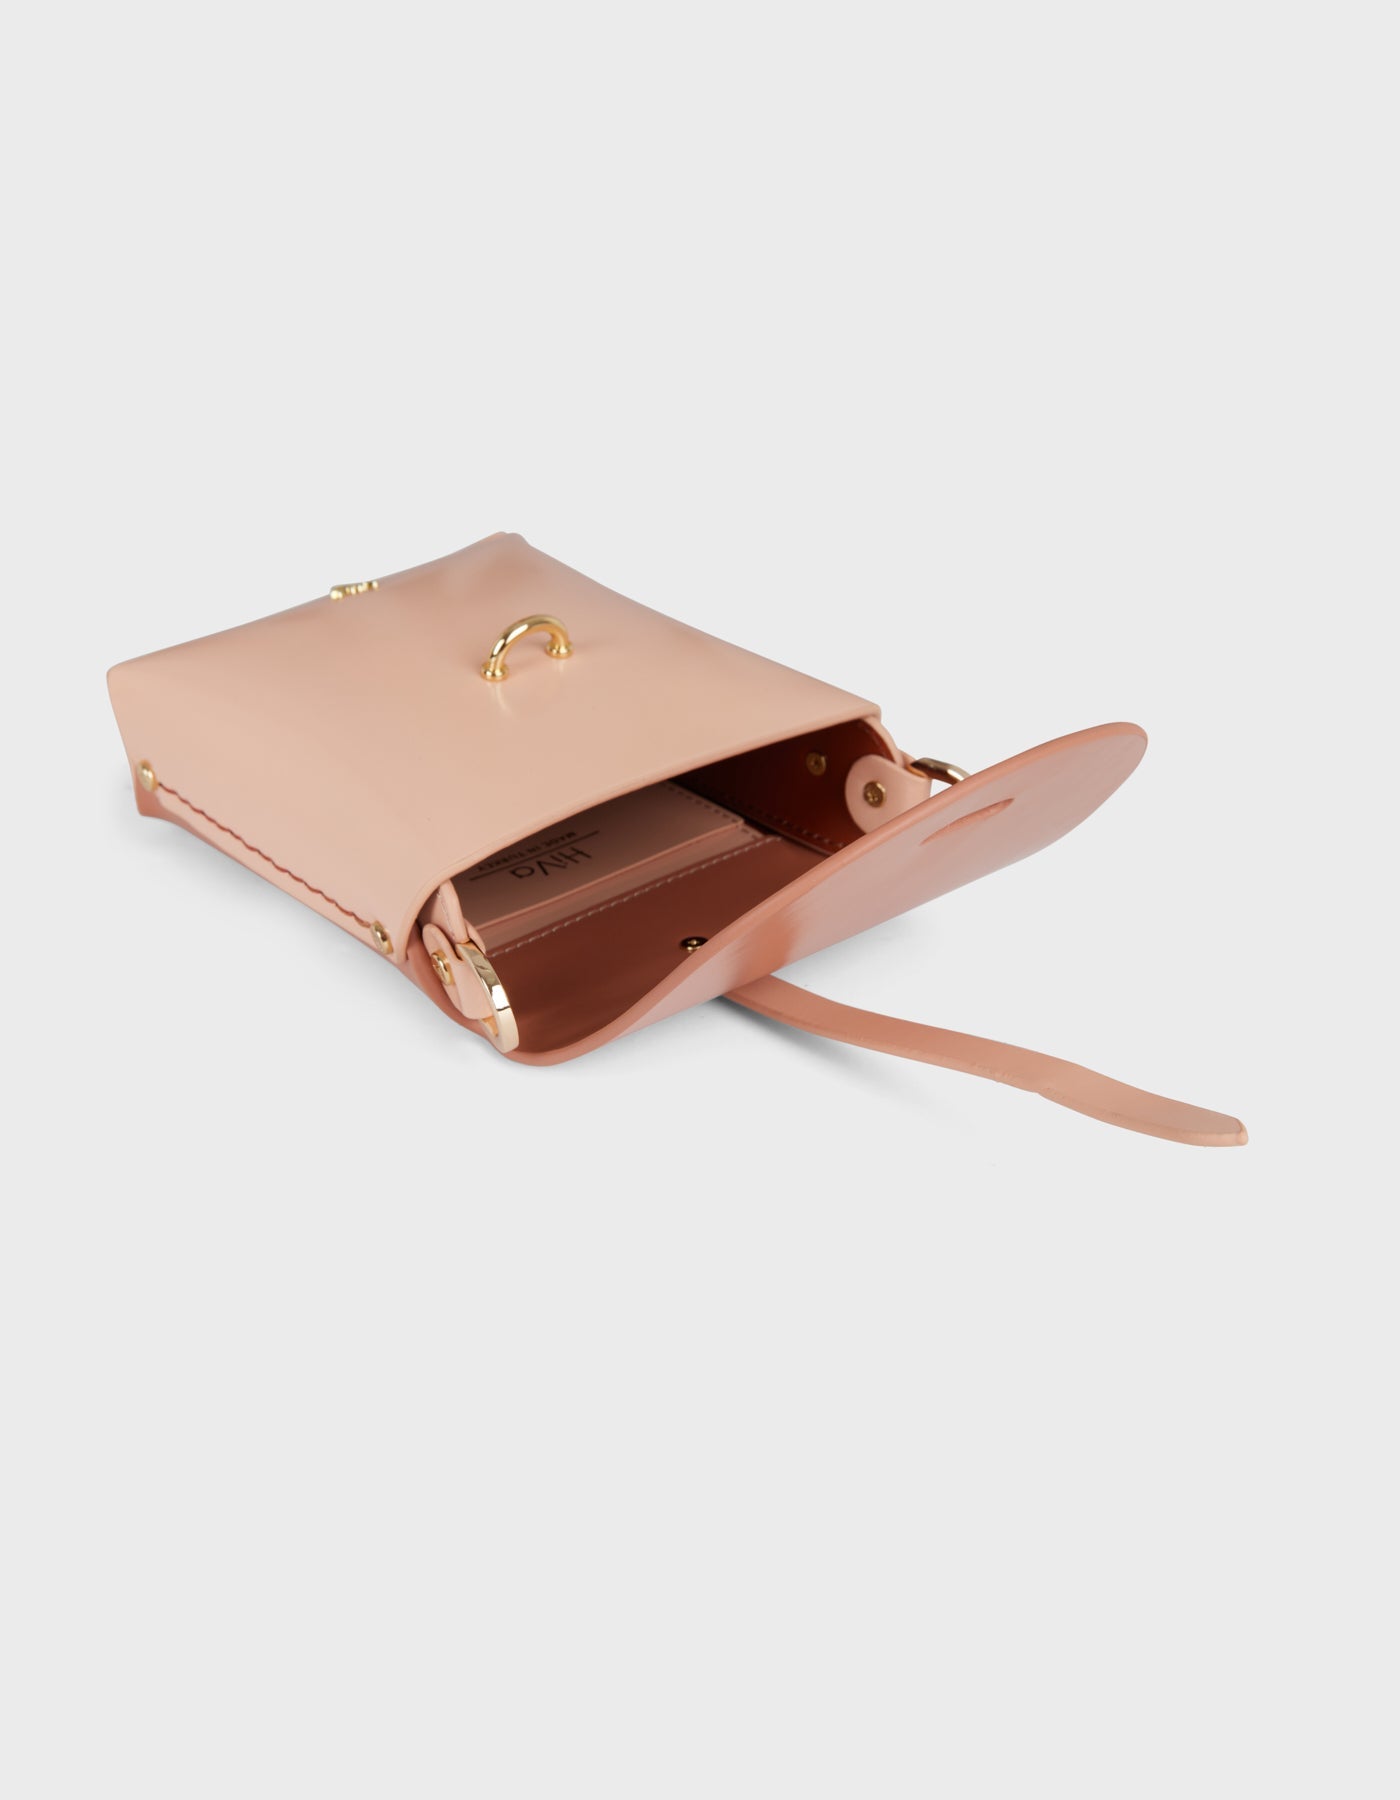 Hiva Atelier | Mini Astrum Shoulder Bag Peach Sand | Beautiful and Versatile Leather Accessories